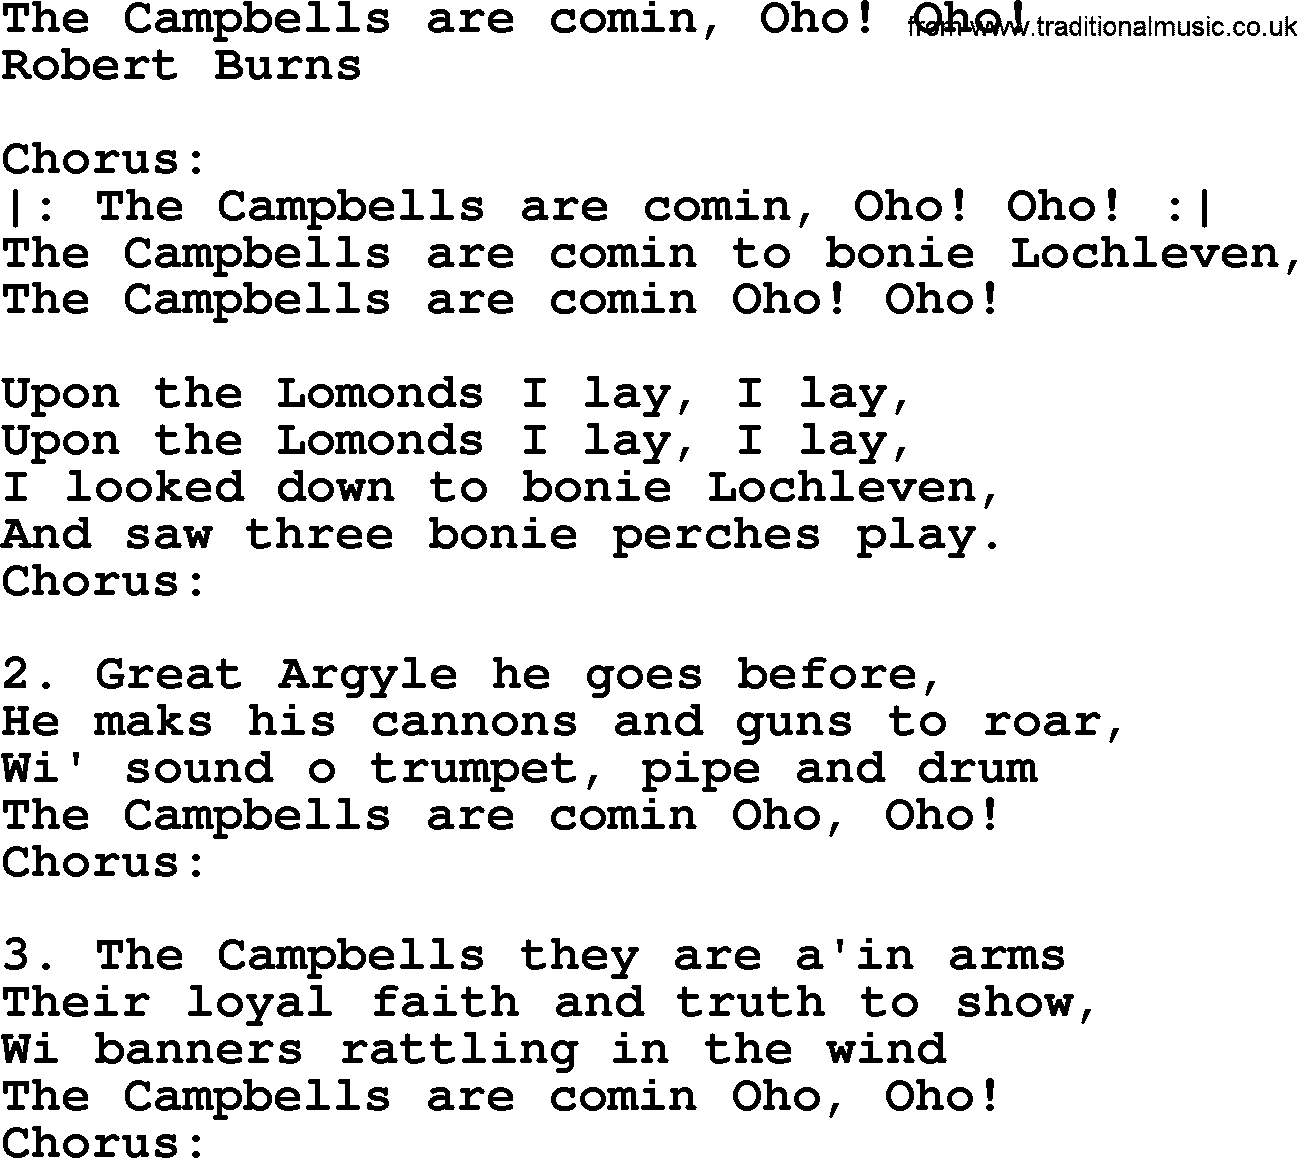 Robert Burns Songs & Lyrics: The Campbells Are Comin, Oho! Oho!